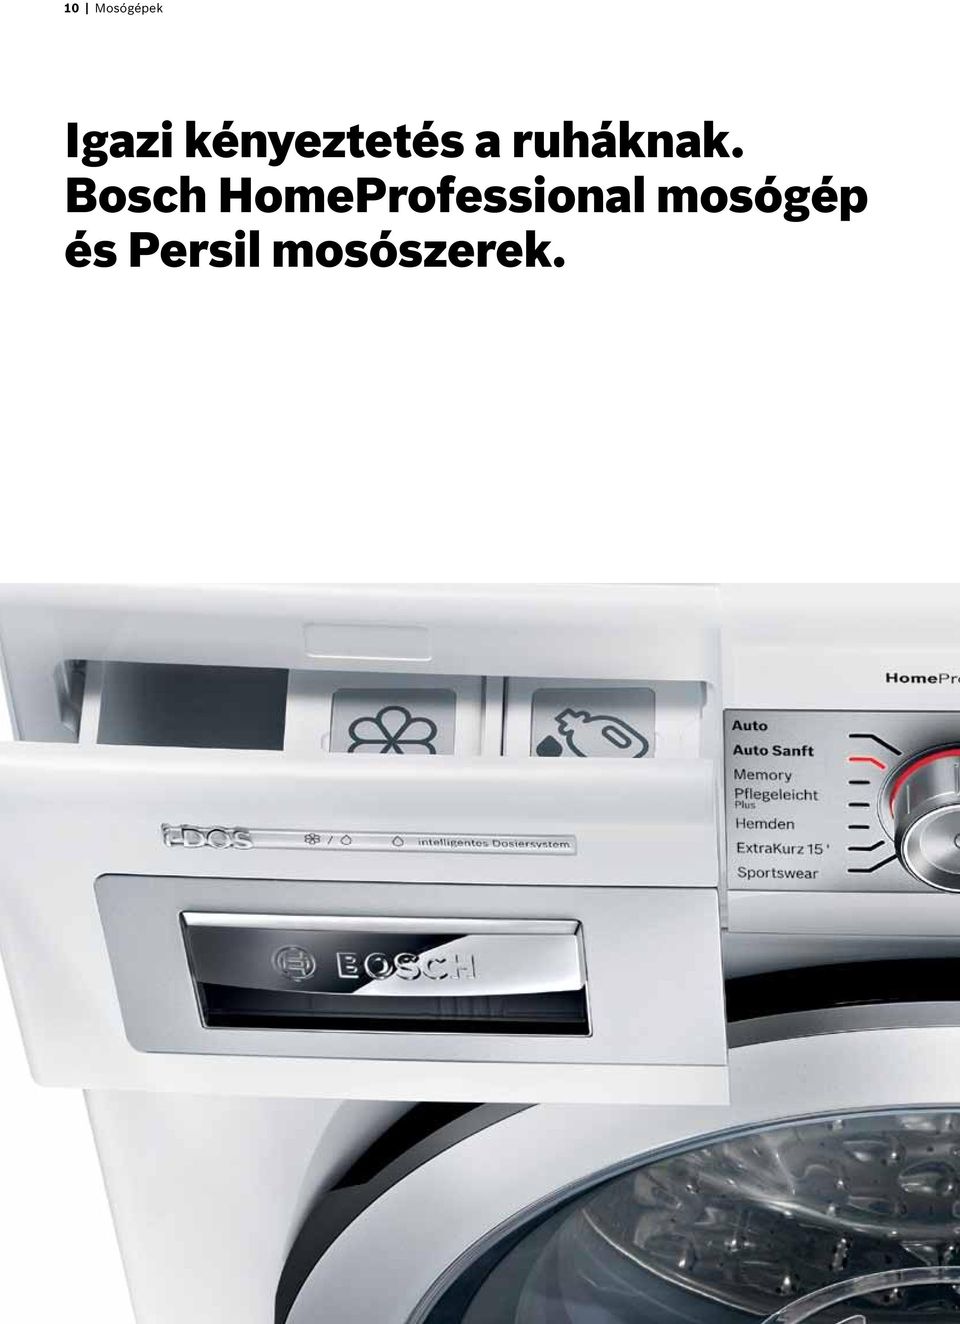 Bosch HomeProfessional